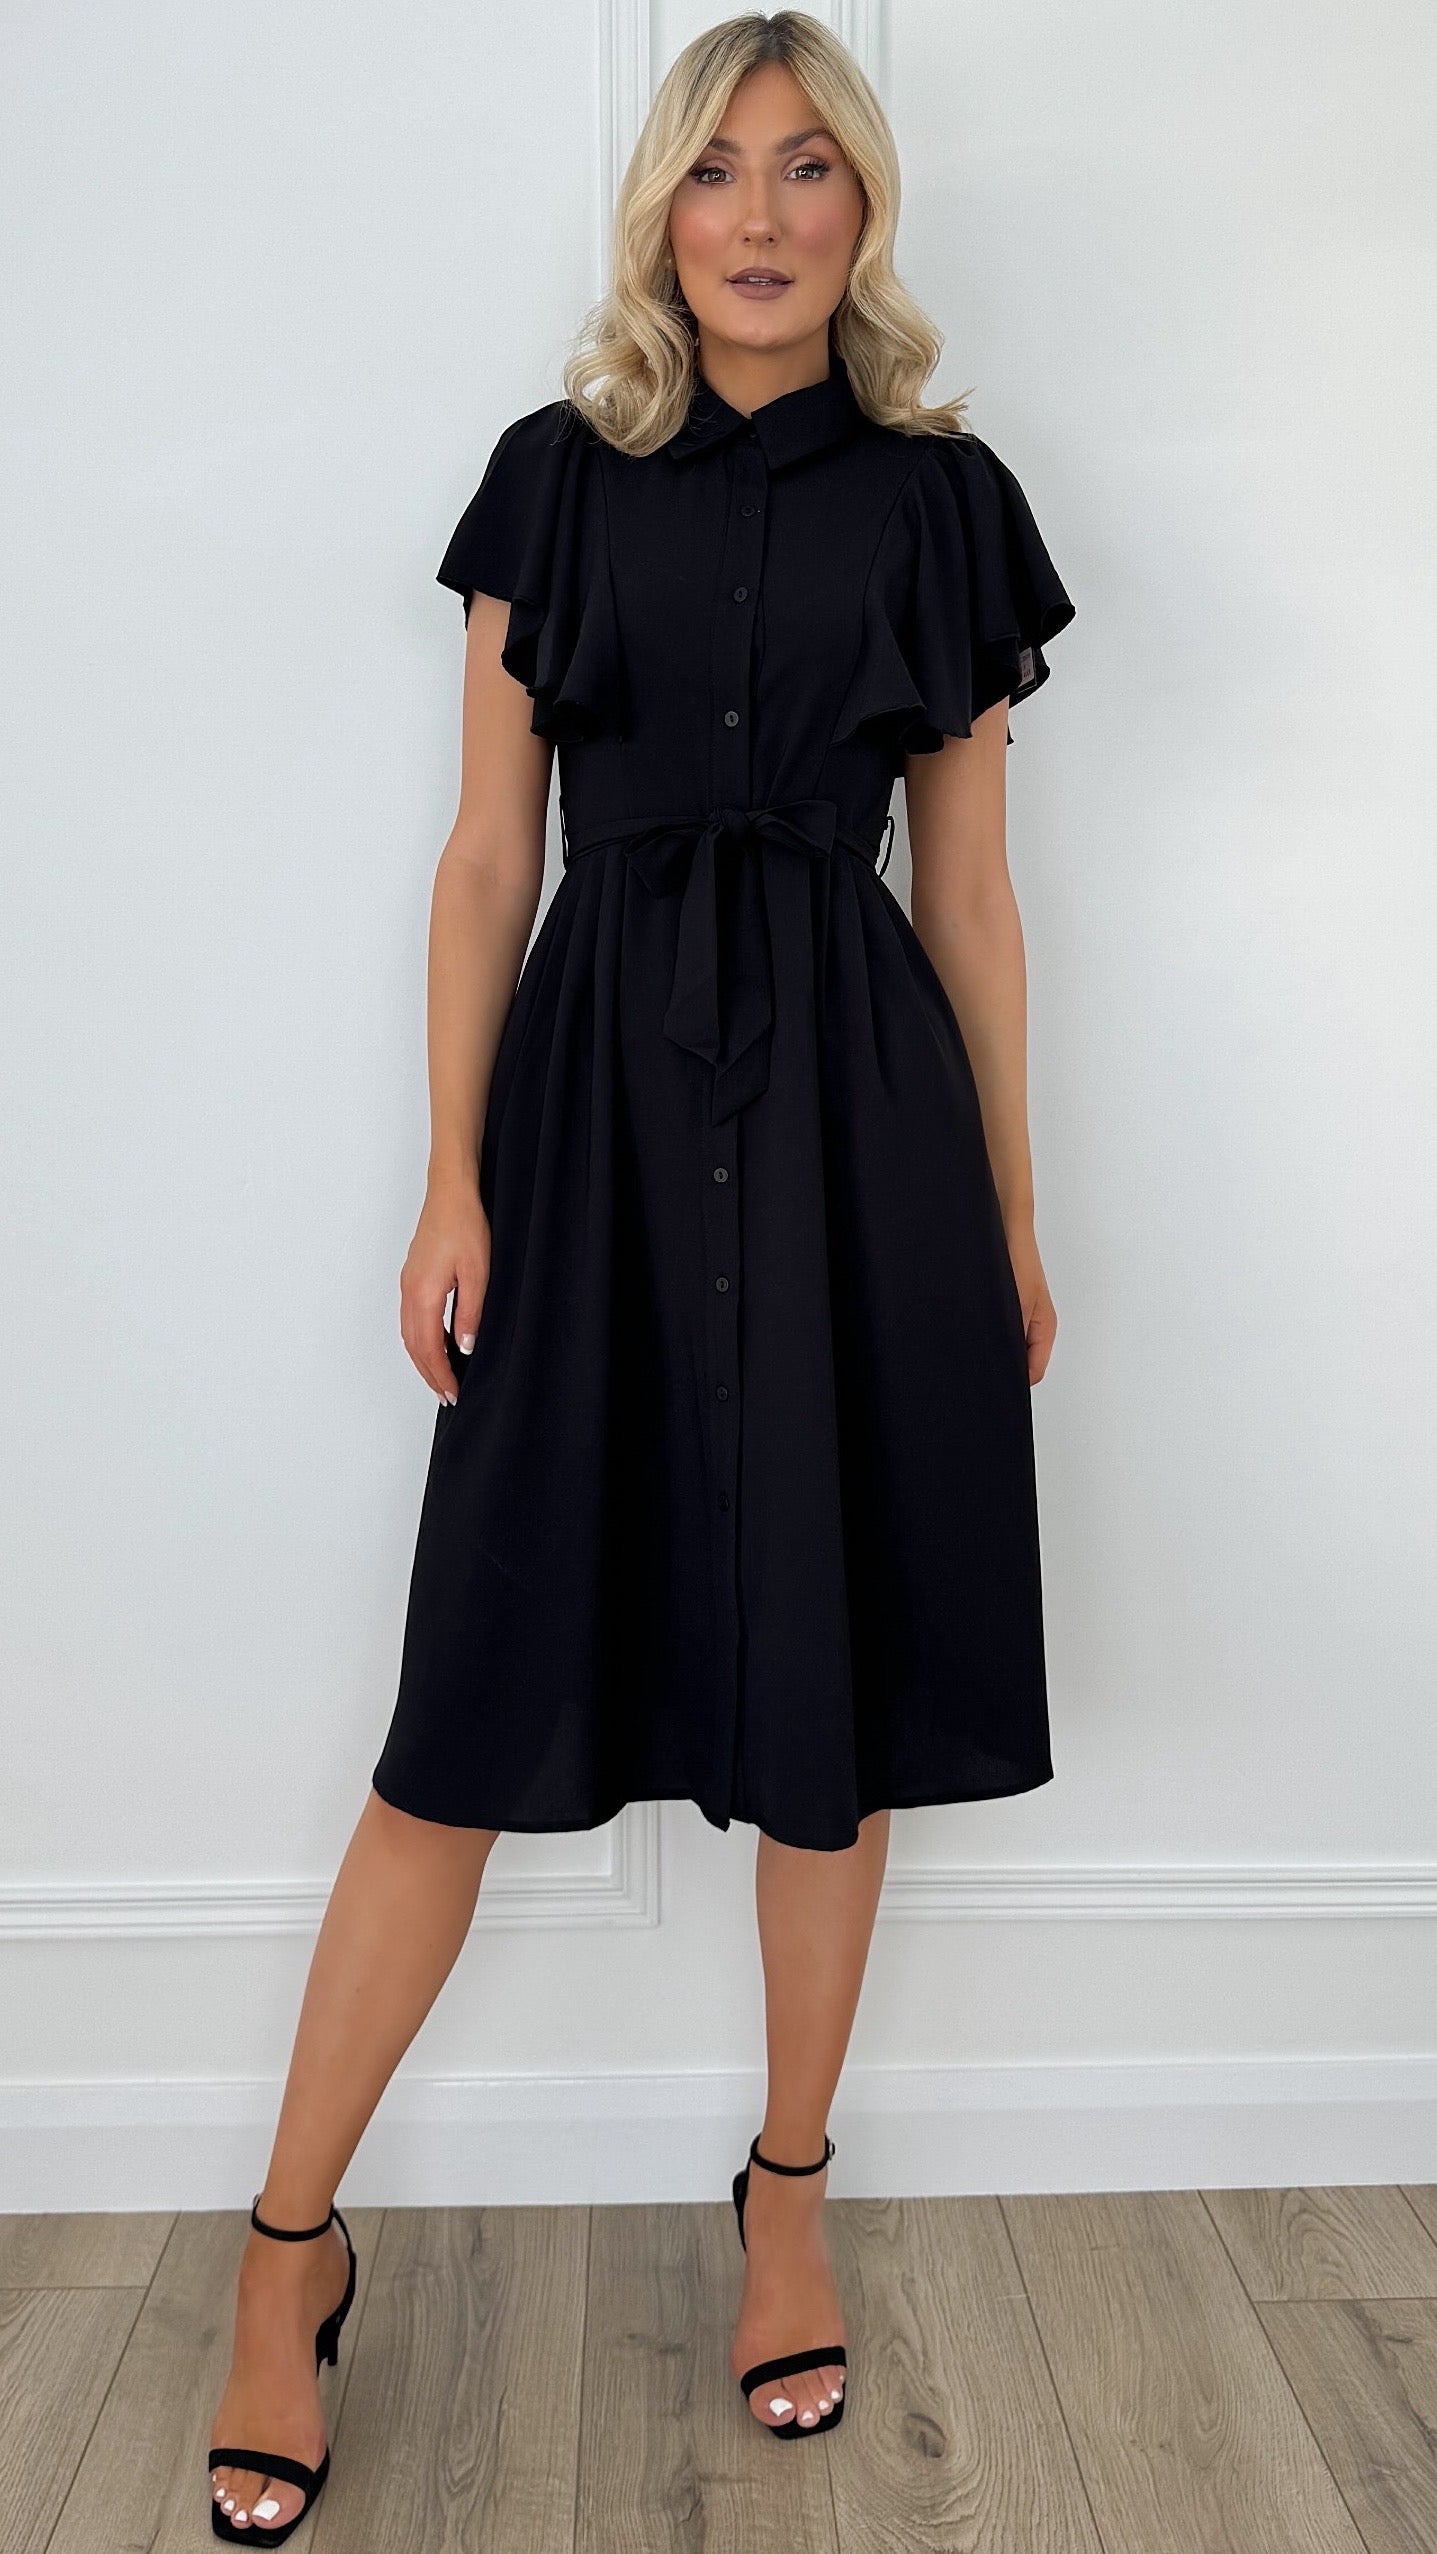 Ruffle Short Sleeve Shirt Dress - Black